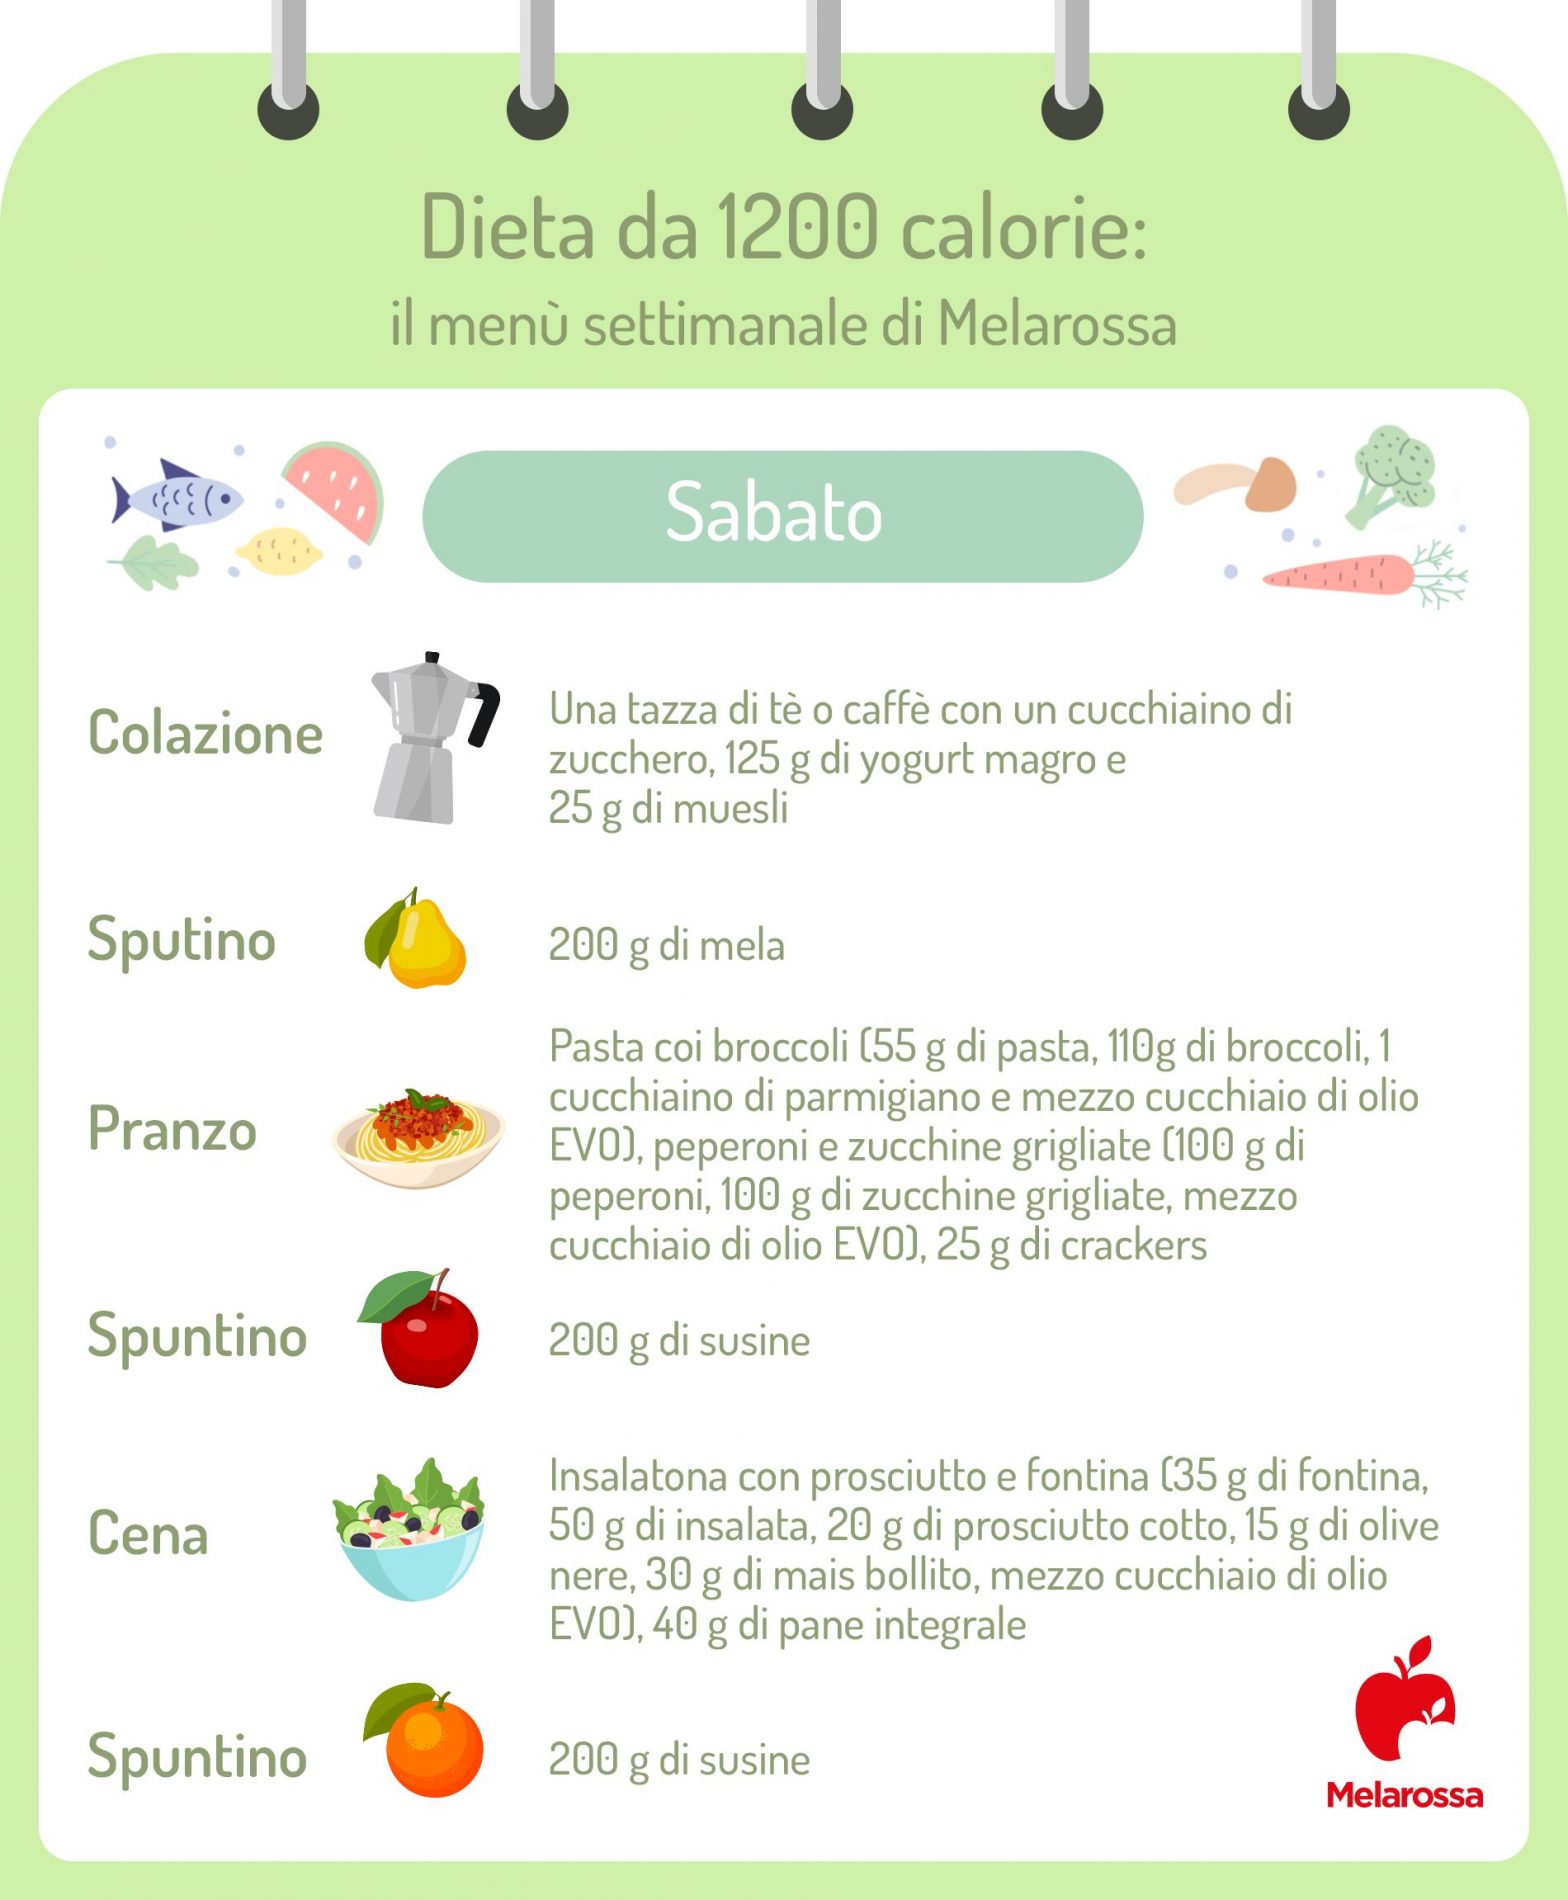 dieta 1200 calorie menu settimanale: sabato